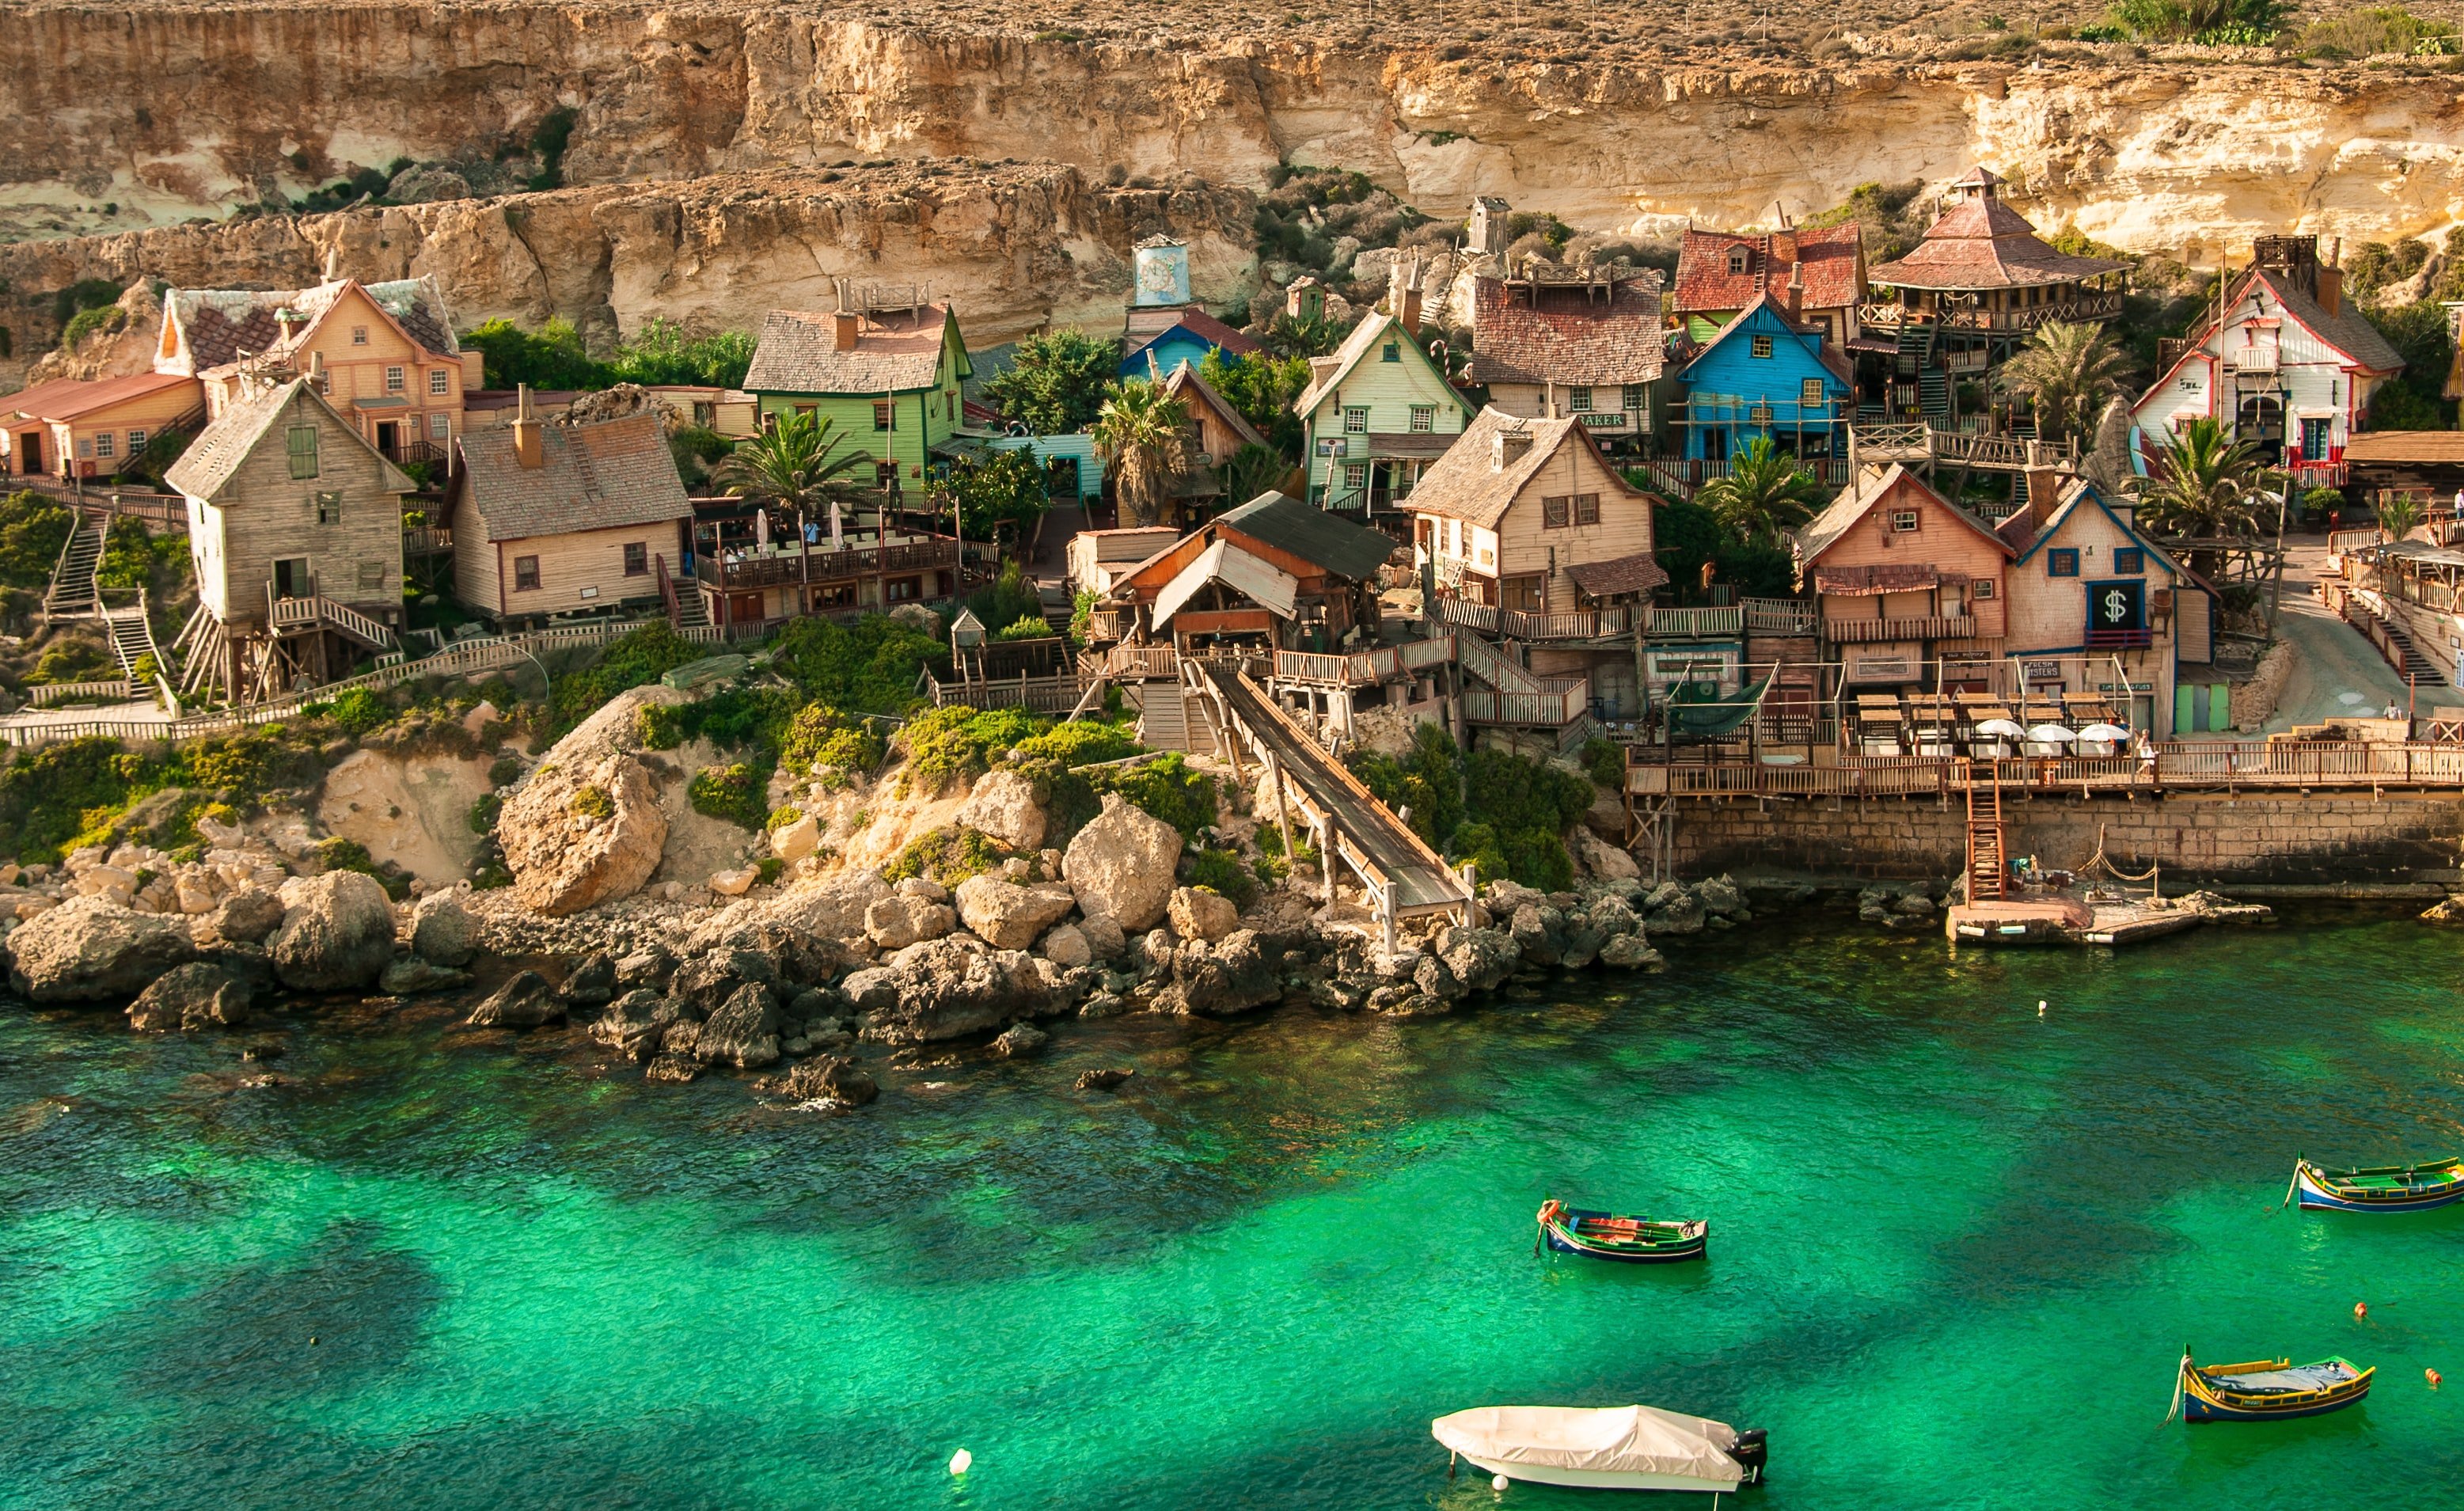 The popeye village in Malta.